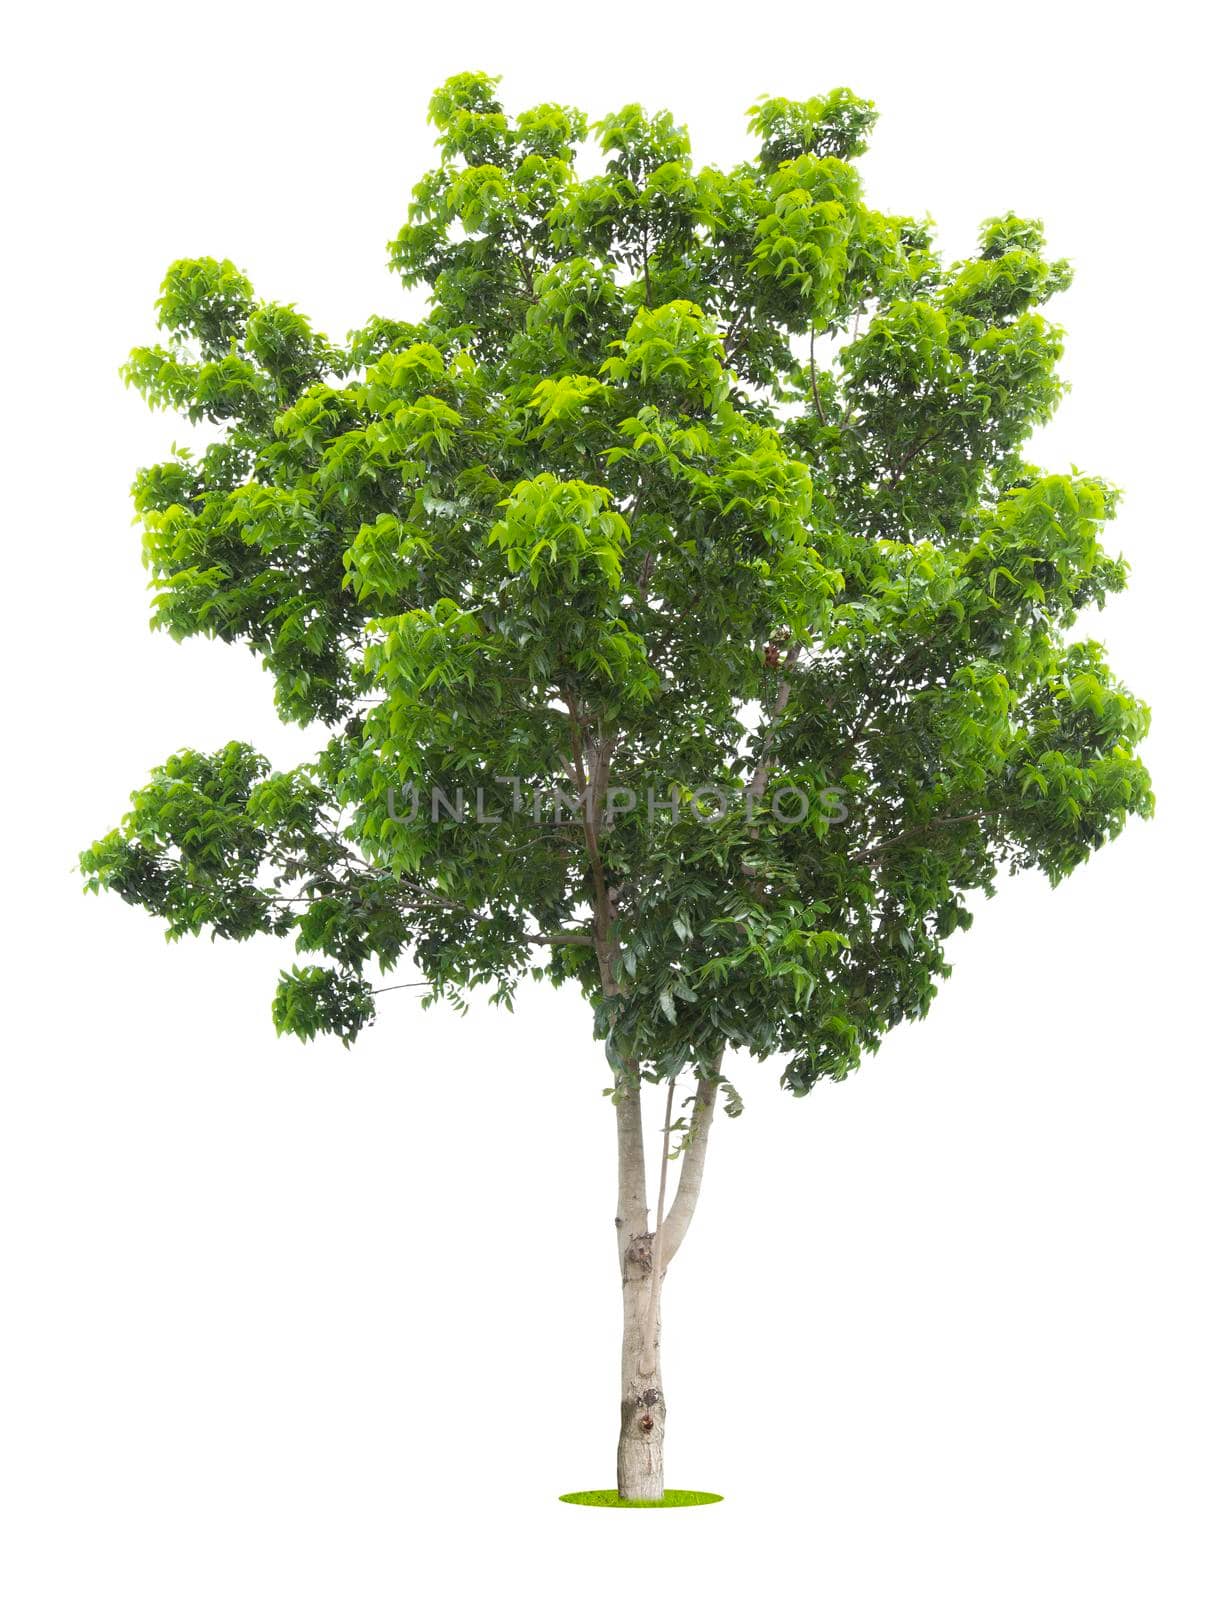 The freshness big green tree isolated on white background.